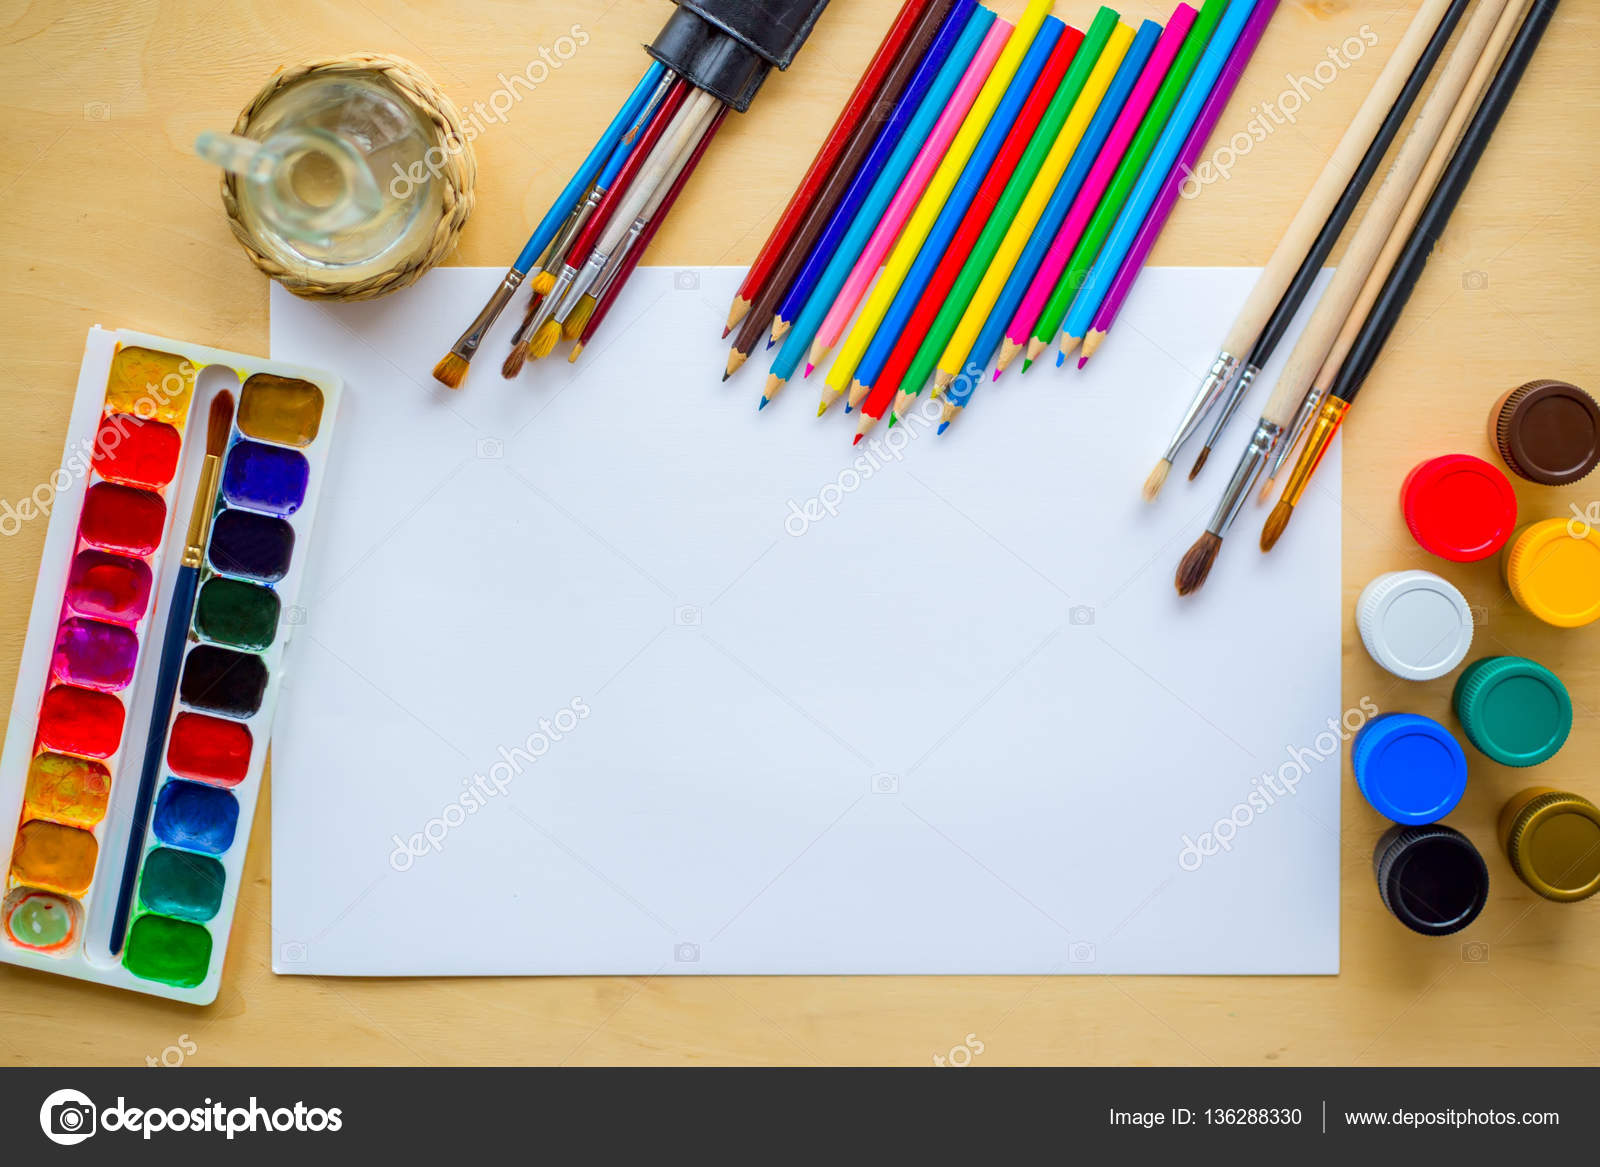 https://st3.depositphotos.com/5472684/13628/i/1600/depositphotos_136288330-stock-photo-drawing-supplies-brushes-pencil-aquarelle.jpg